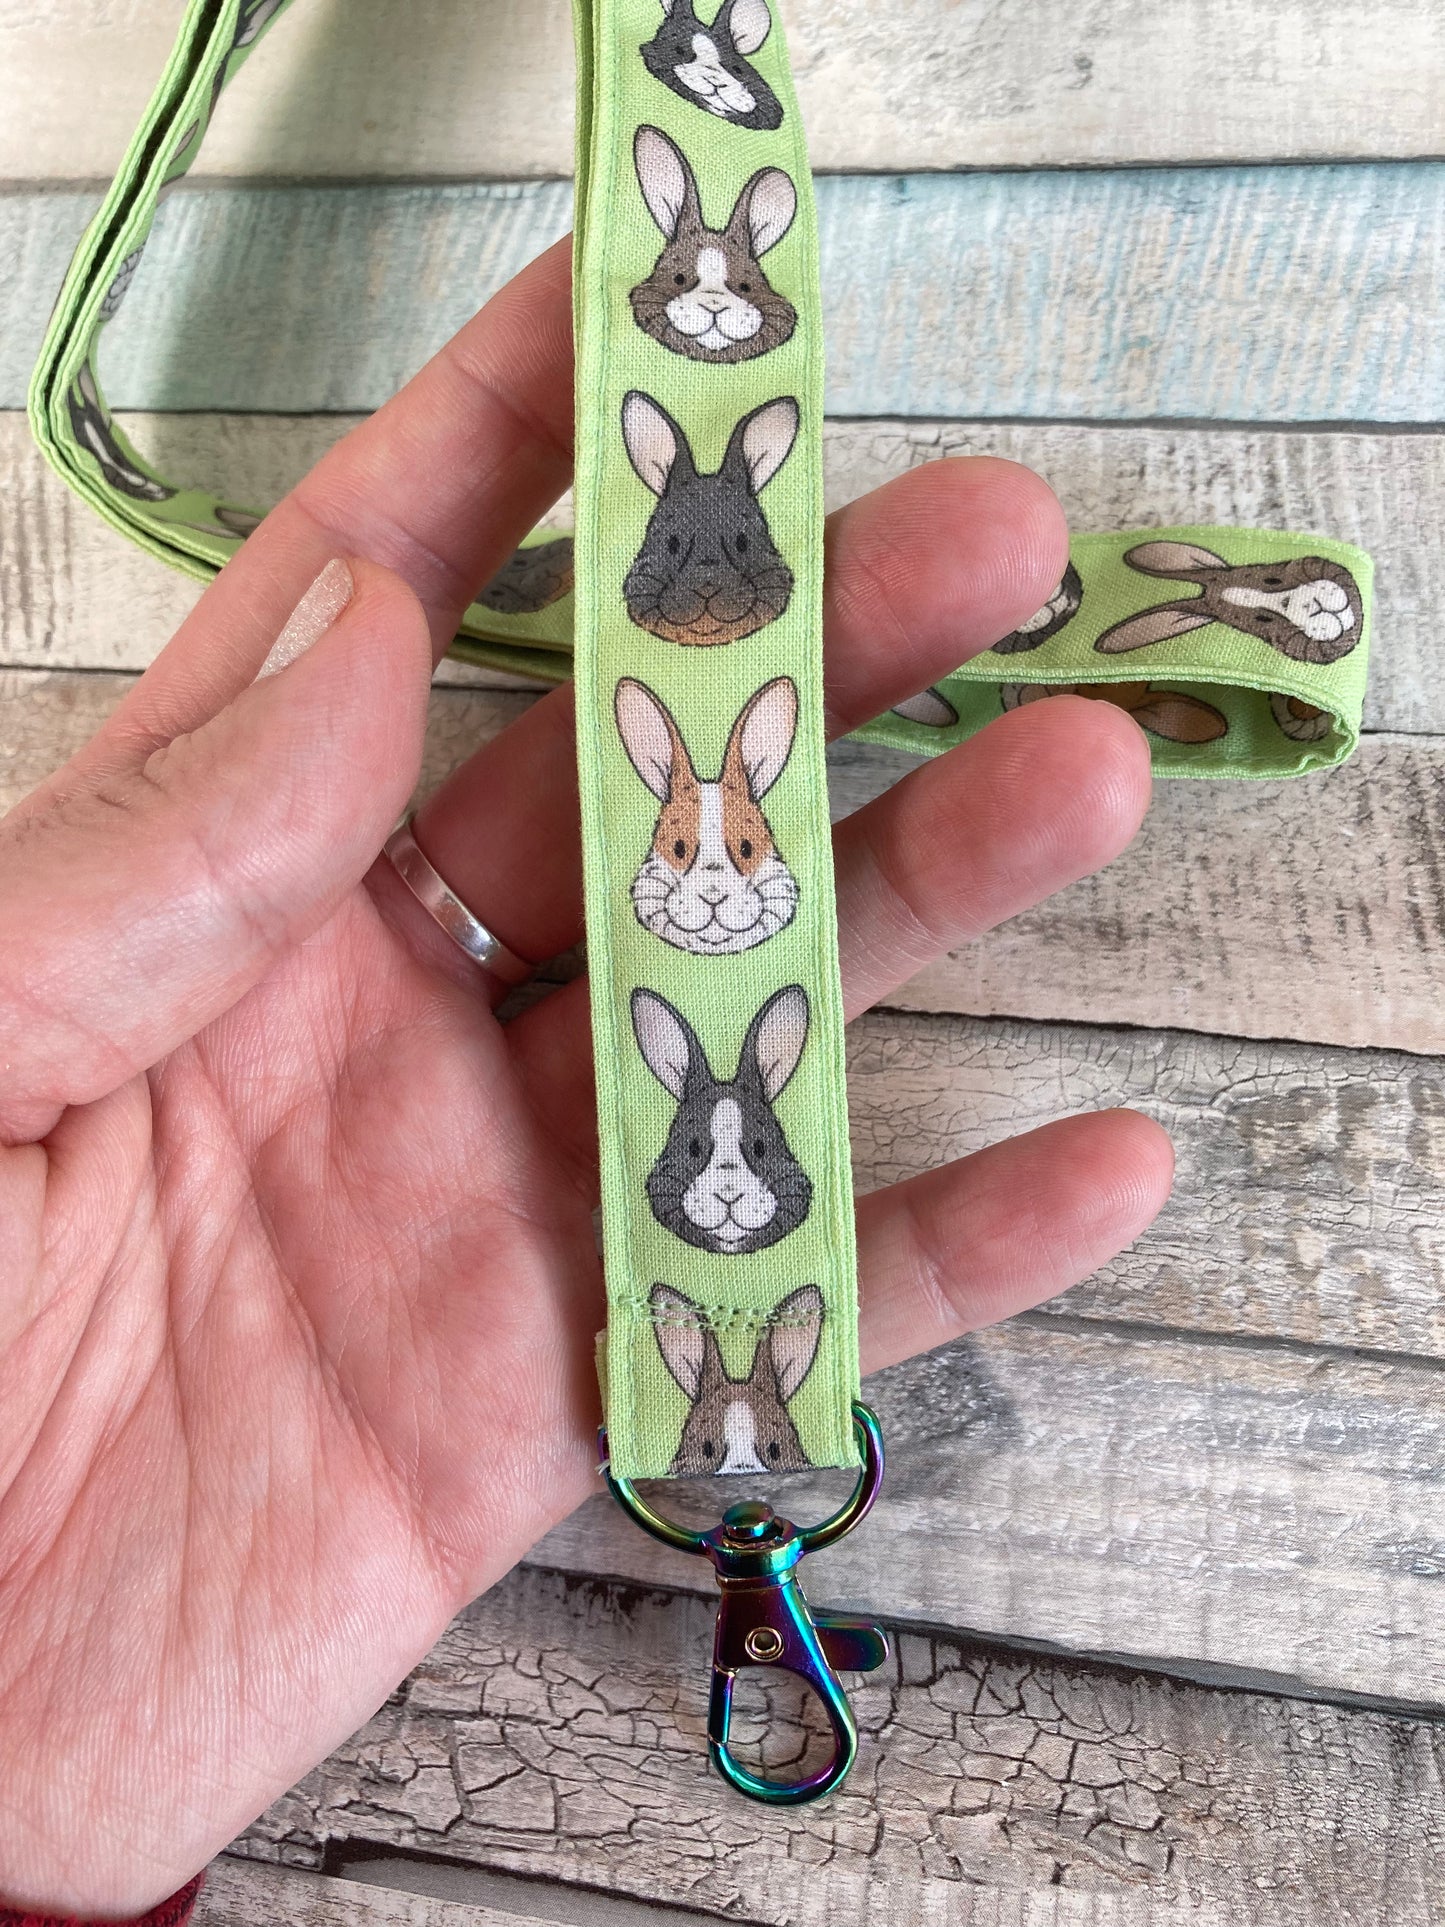 Rabbit Lanyard | Fun Bunny Lanyard Accessory